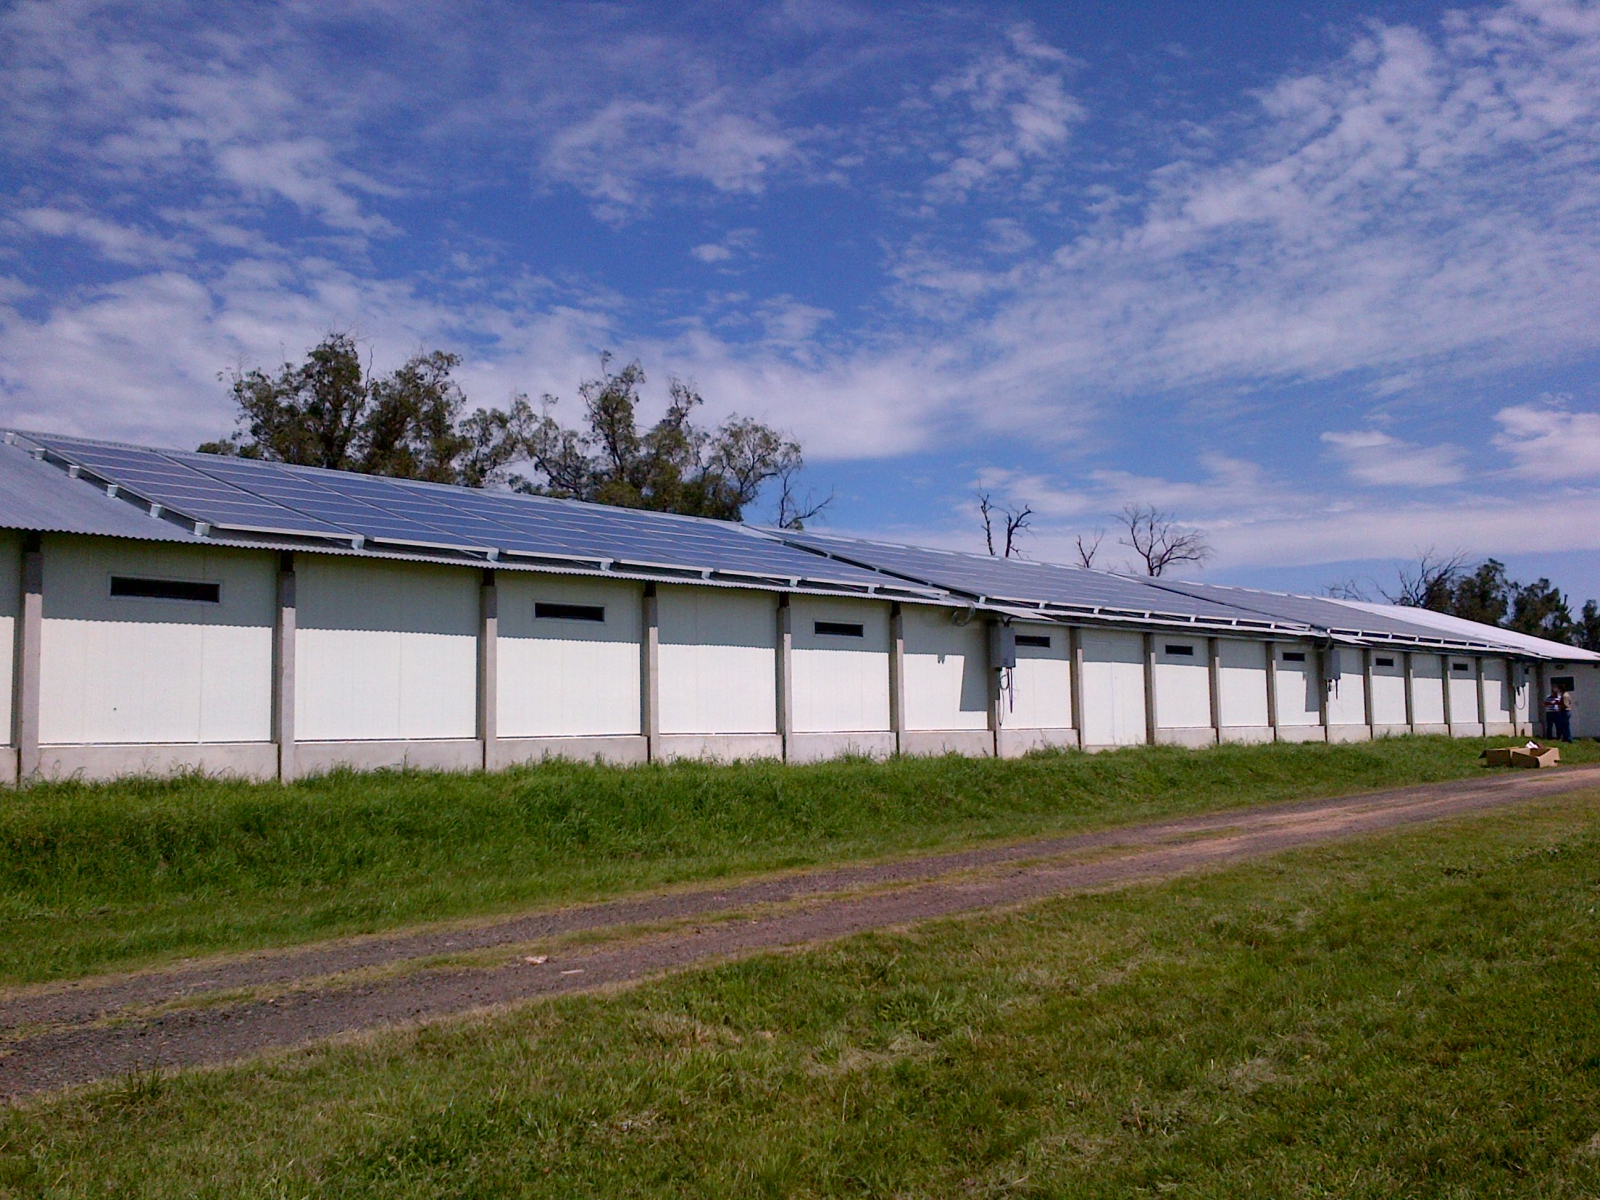 omron-impianto-fotovoltaico-argentina.jpg